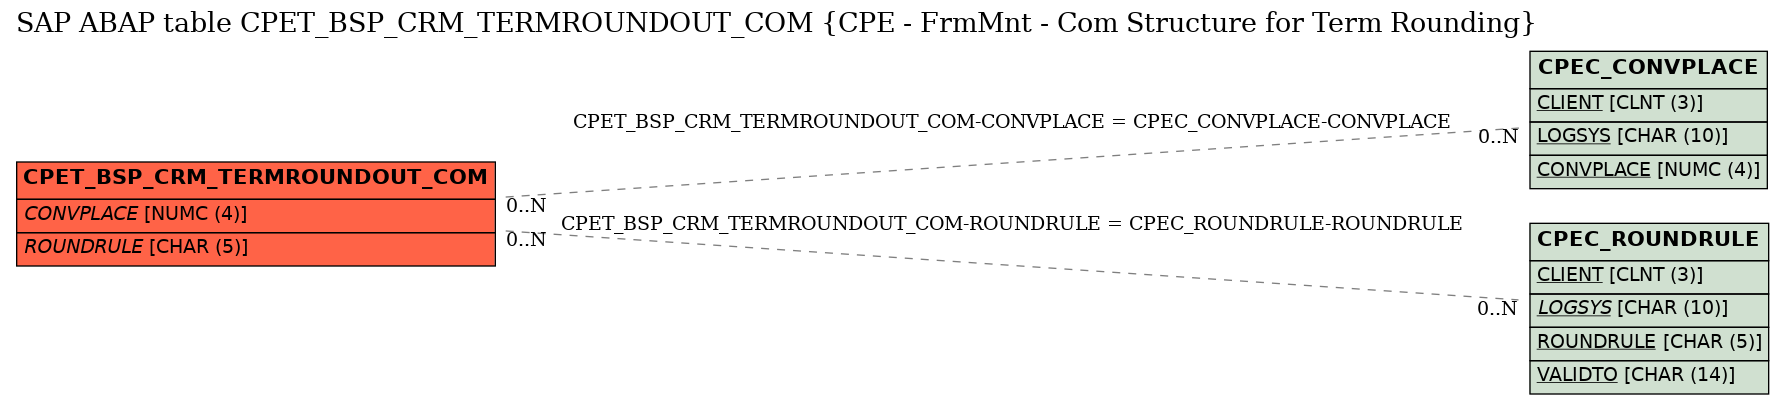 E-R Diagram for table CPET_BSP_CRM_TERMROUNDOUT_COM (CPE - FrmMnt - Com Structure for Term Rounding)